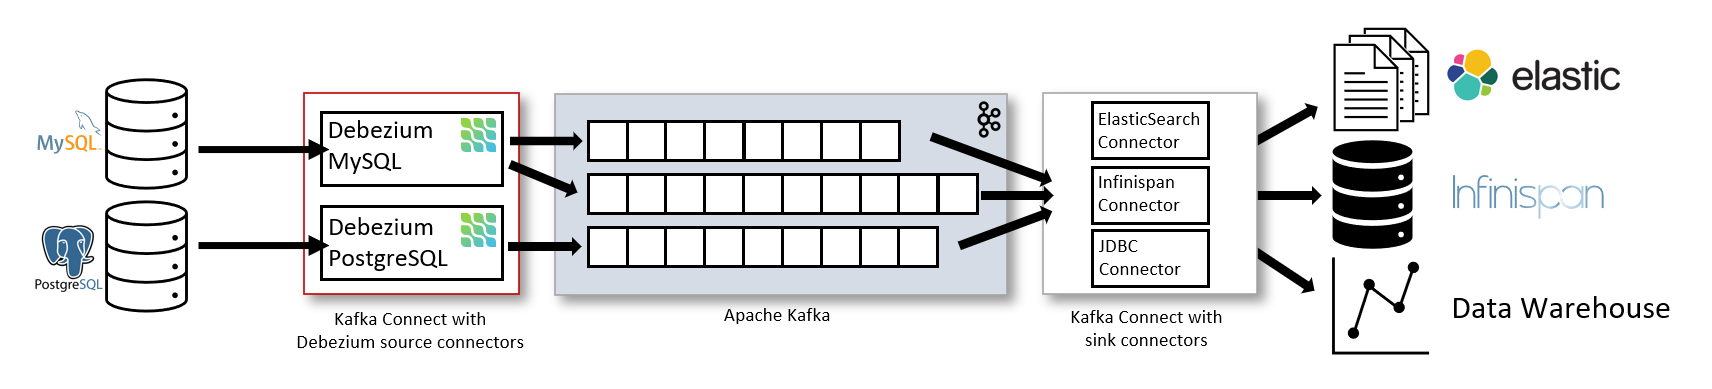 Kafka Connect 를 통한 Debezium 의 가장 기본적인 사용 방식 (출처: https://debezium.io/documentation/reference/1.8/architecture.html)